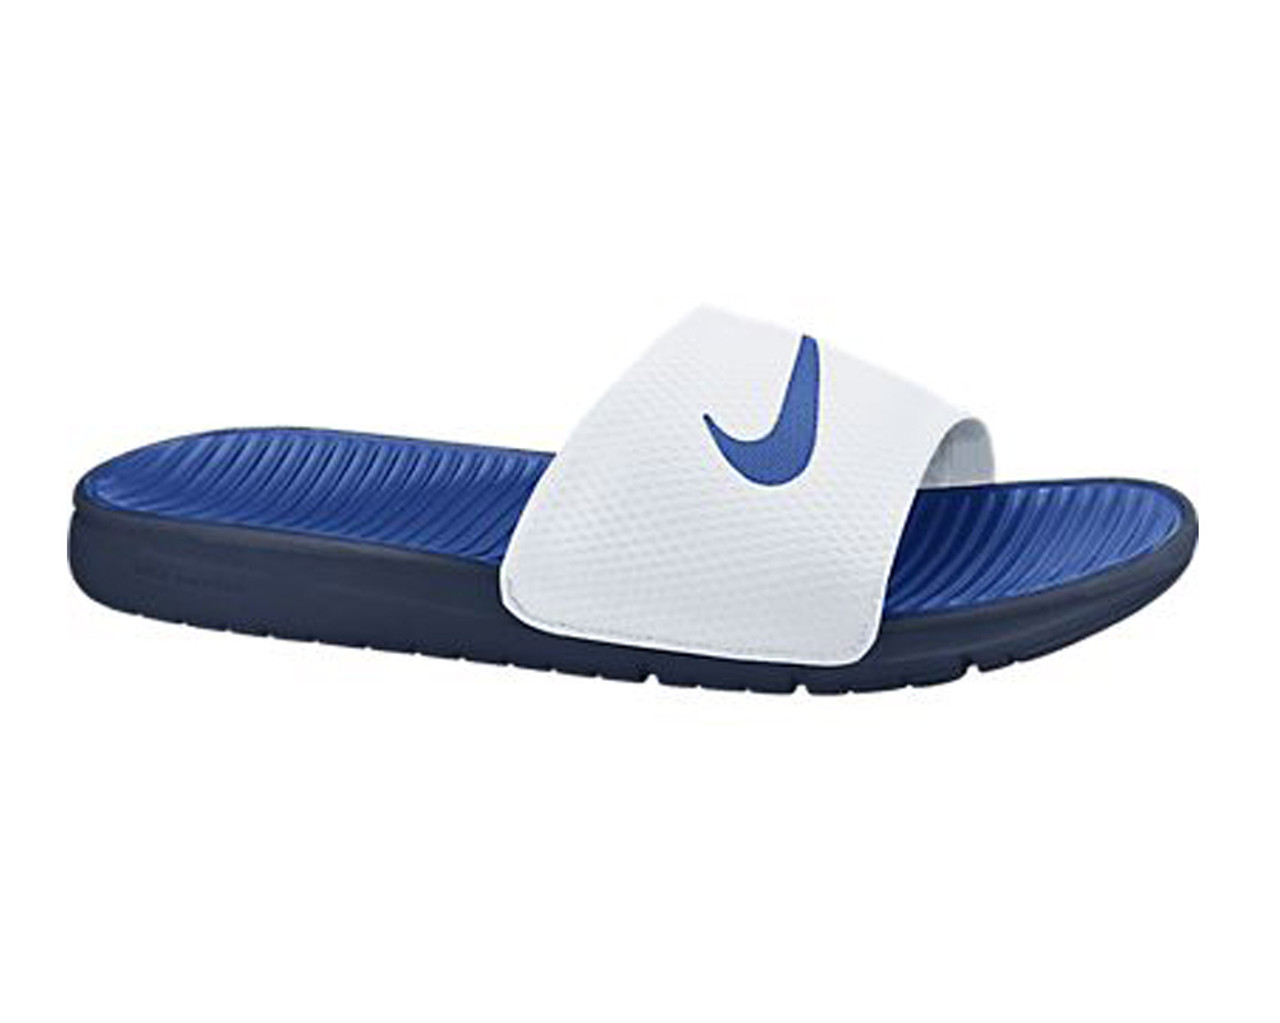 Anormal por inadvertencia romano Nike Men's Benassi Solarsoft Slide Sandal - Blue | Discount Nike Men's  Sandals & More - Shoolu.com | Shoolu.com